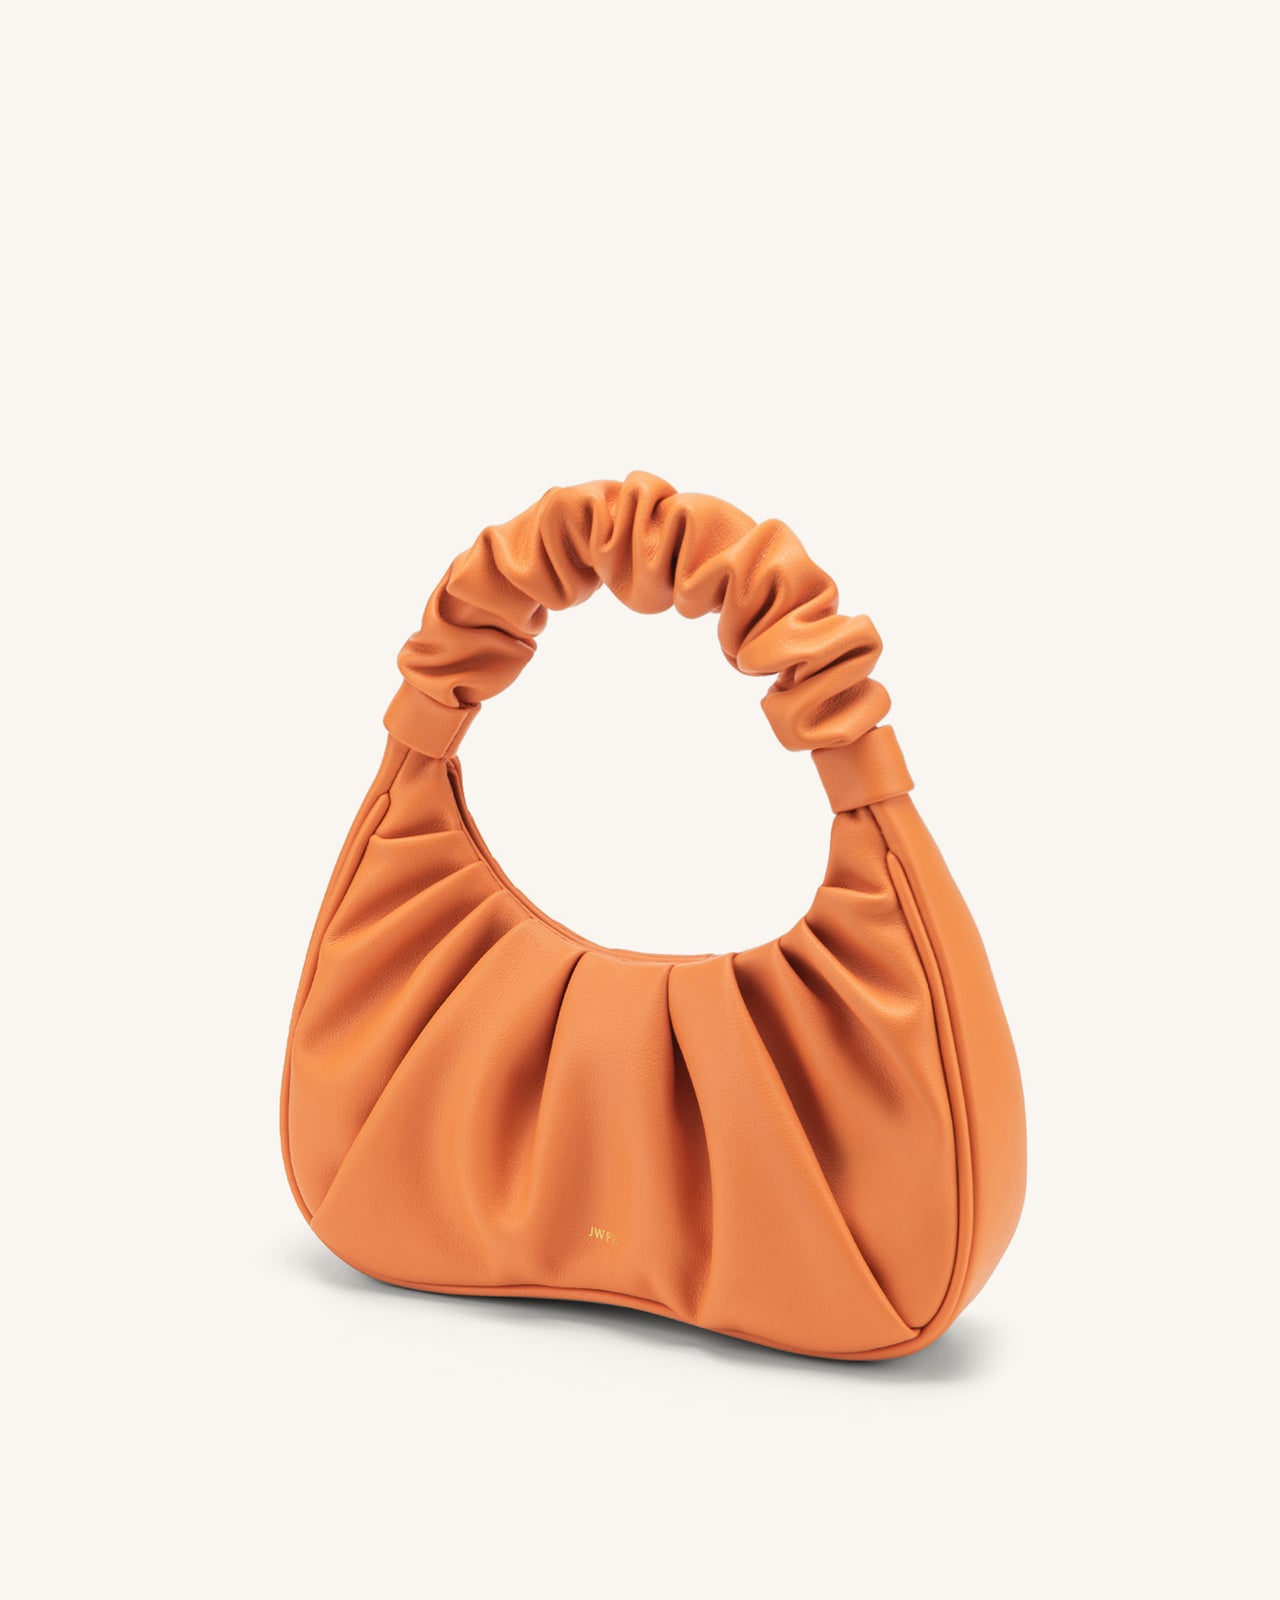 Gabbi Ruched Hobo Handbag - Orange